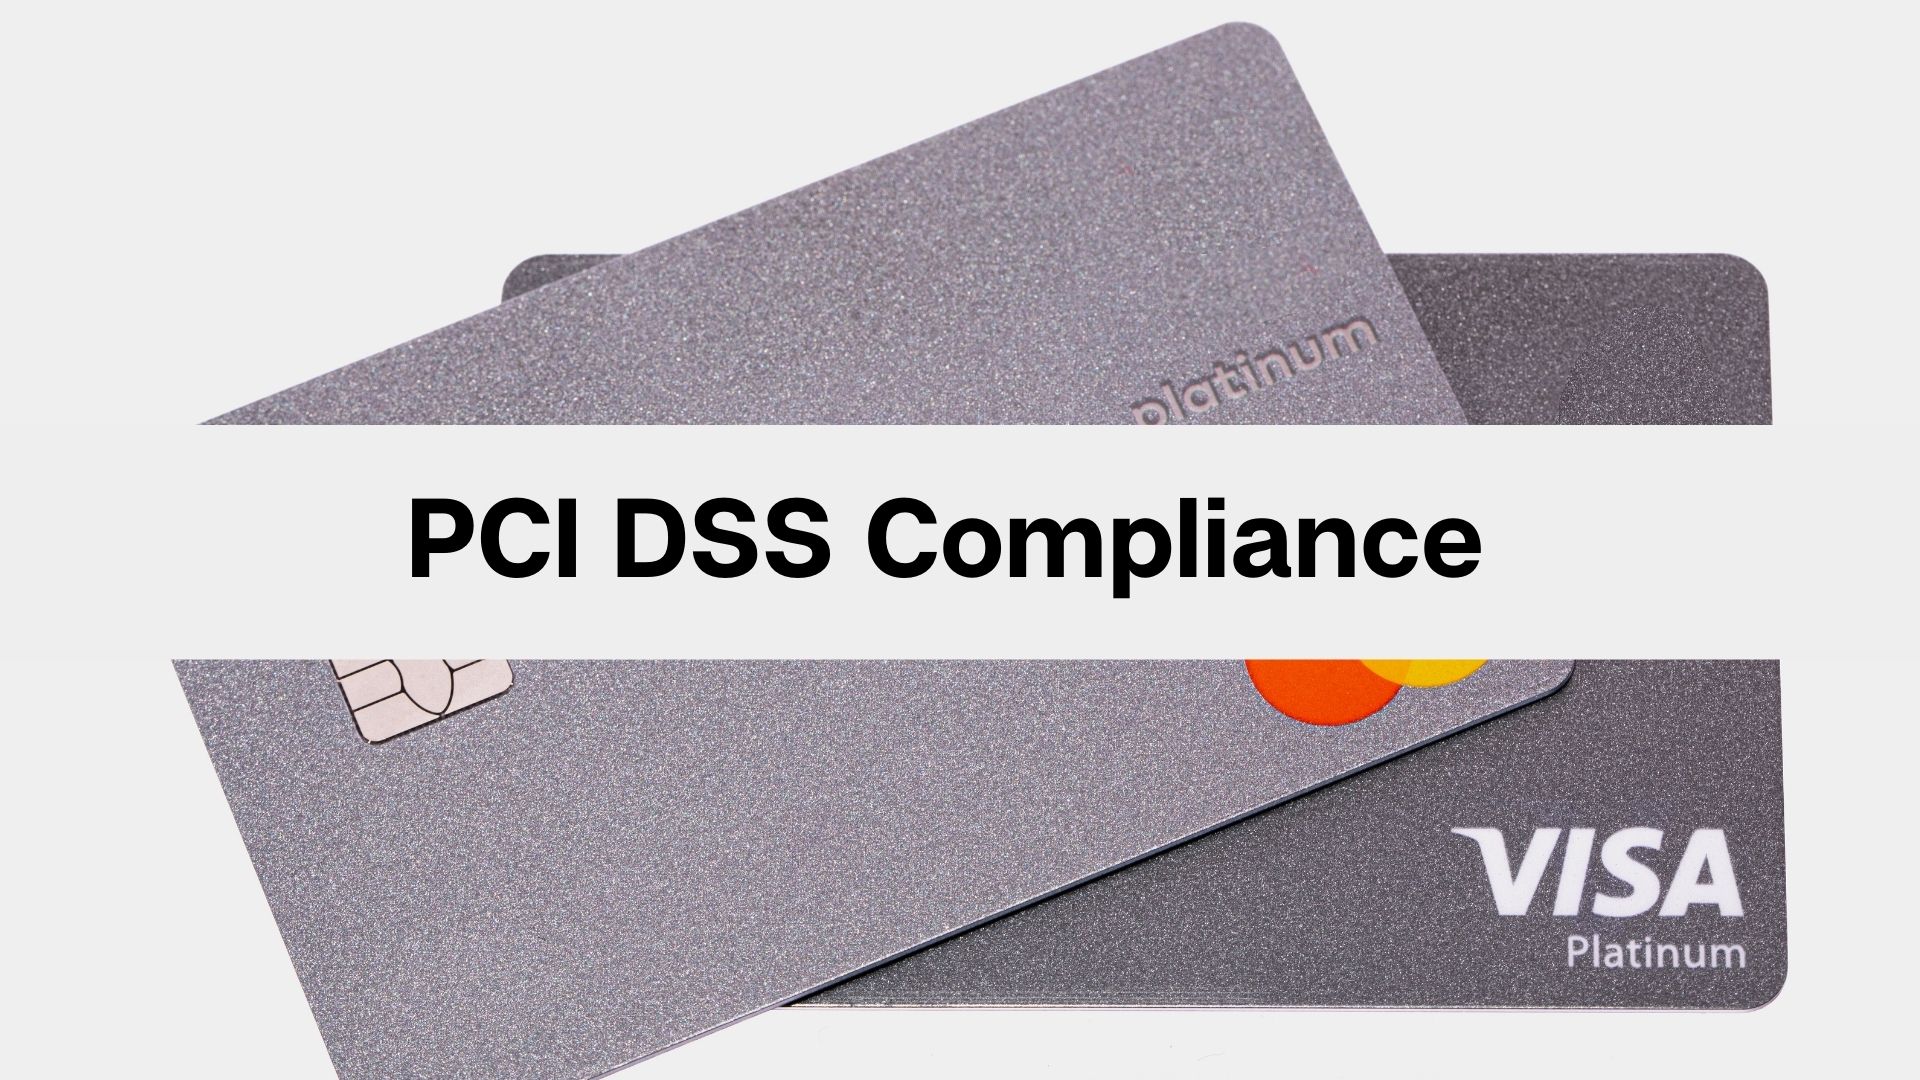 https://www.groundlabs.com/wp-content/uploads/2014/08/PCI-DSS-Compliance.jpg